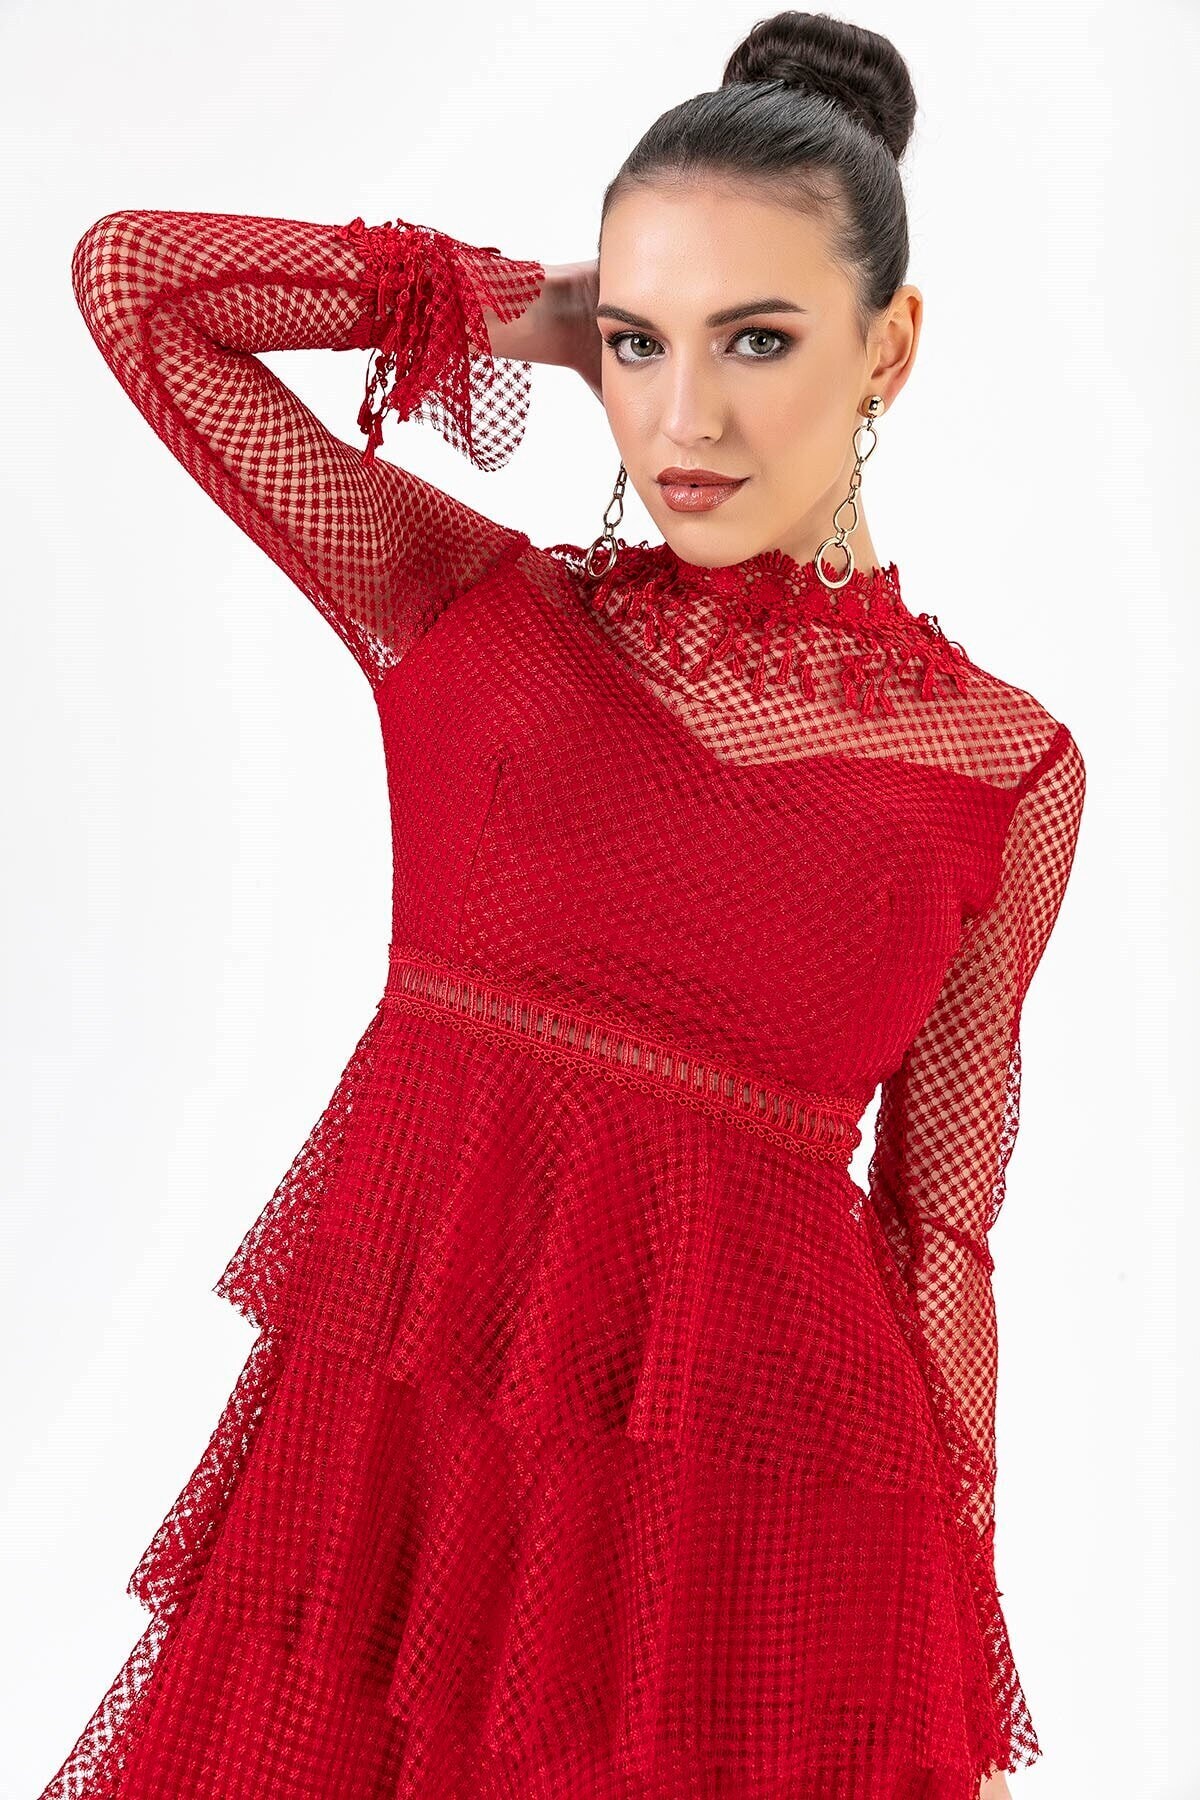 Lovely Mini Red Dress Valentines Day Dress Red Elegant Party | Etsy